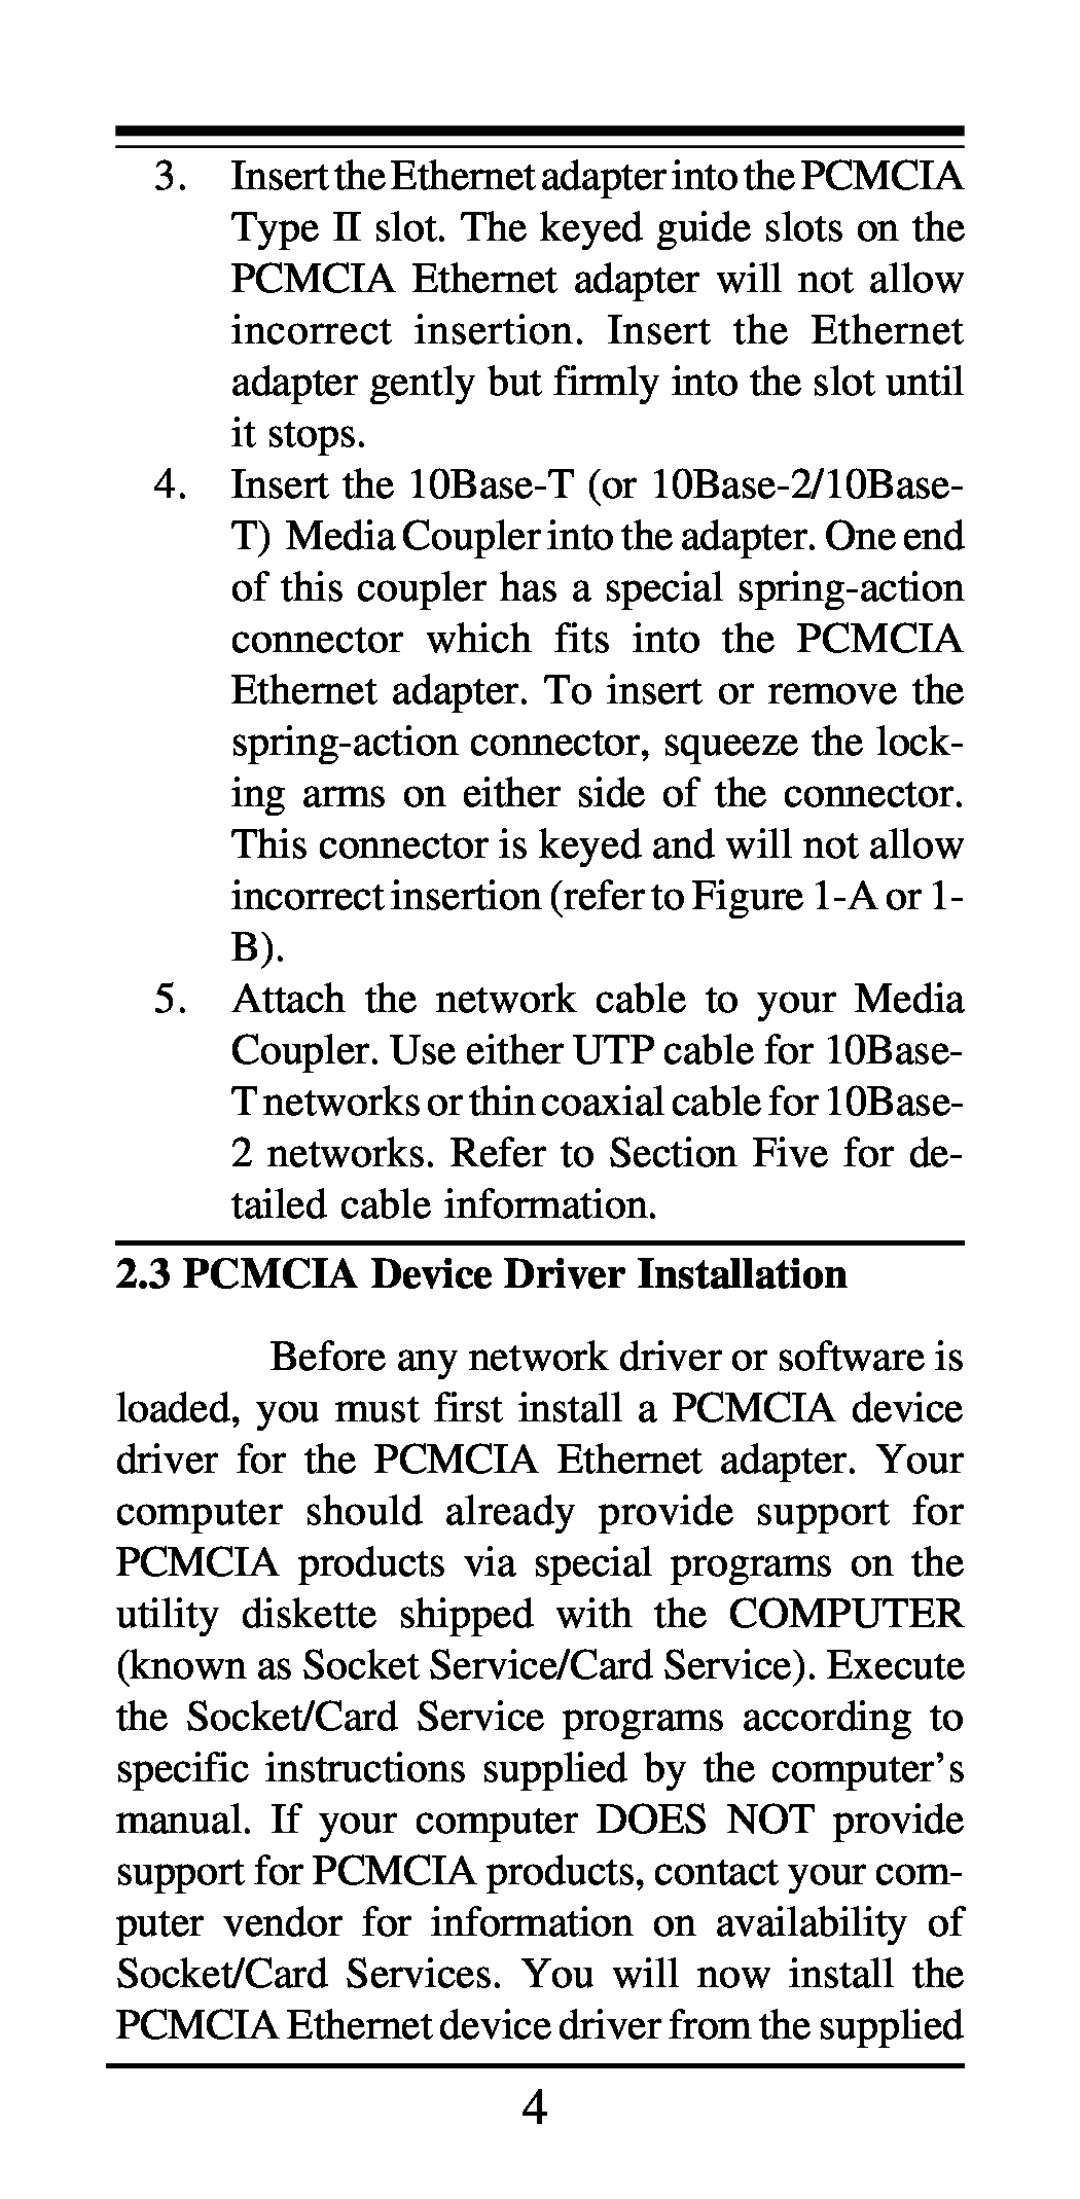 MaxTech PCN2000 Series manual PCMCIA Device Driver Installation 